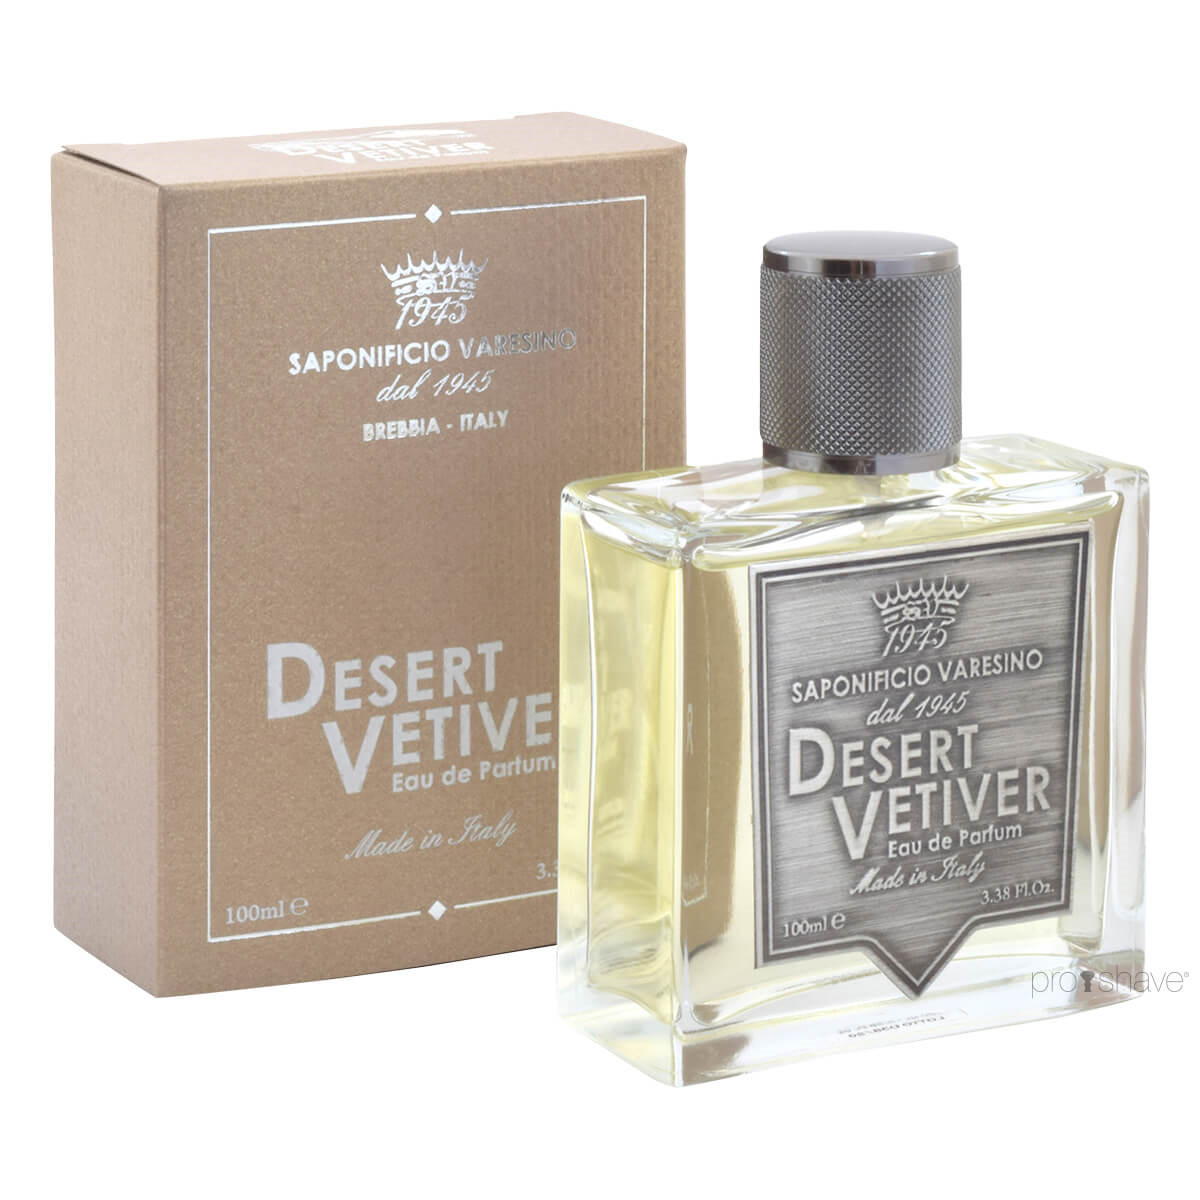 Billede af Saponificio Varesino Eau de Parfum, Desert Vetiver, 100 ml.